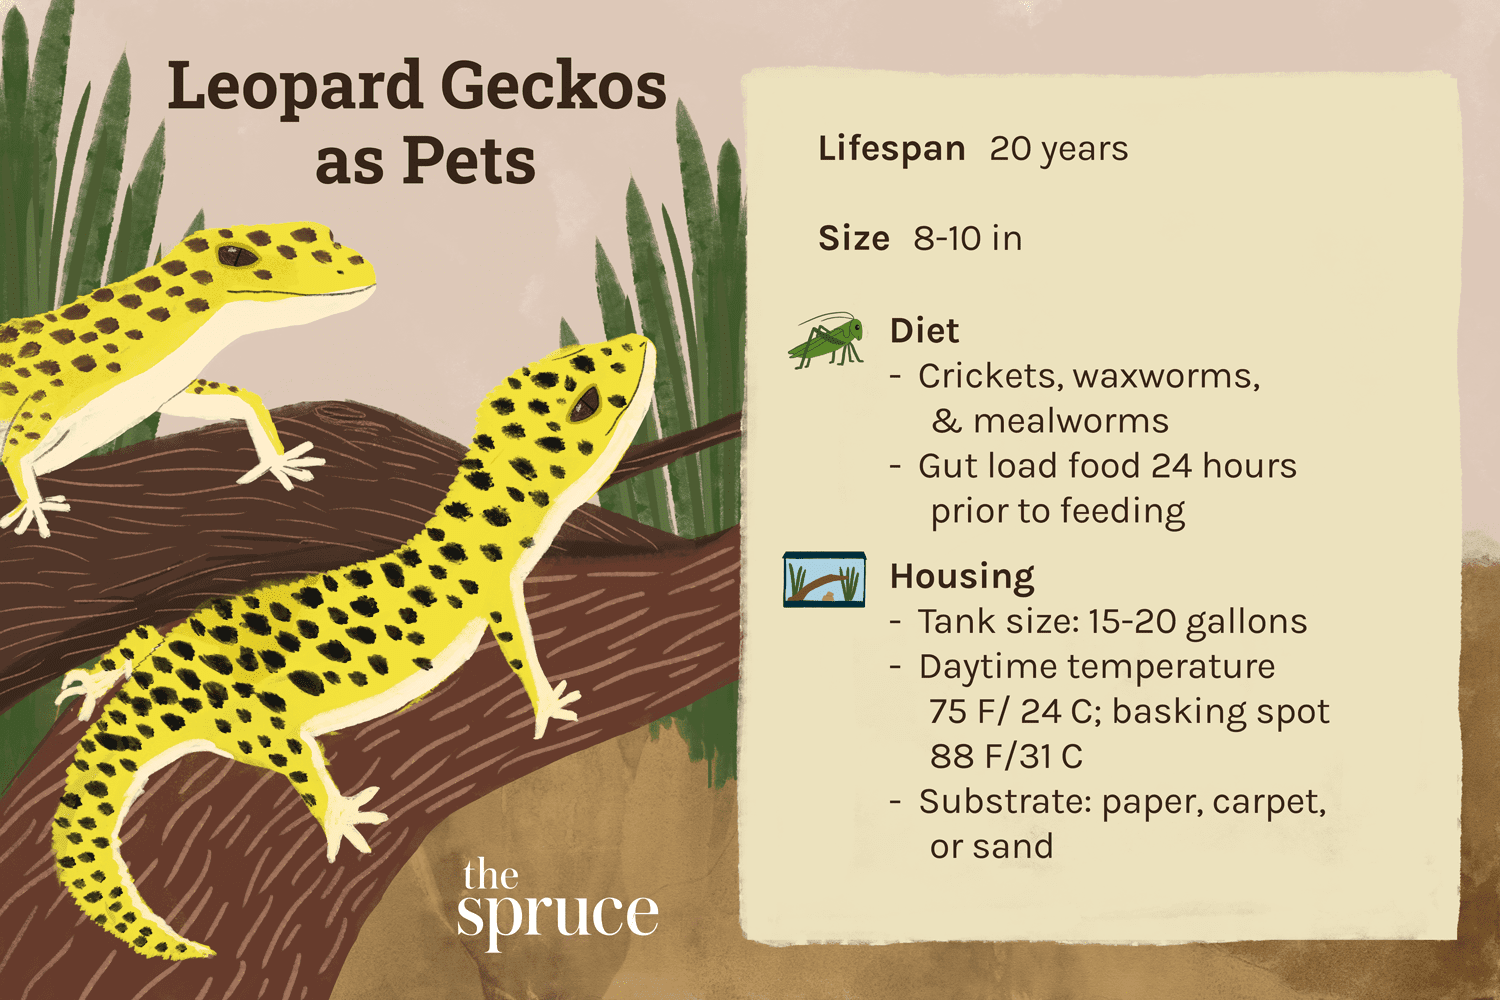 Gekon leopardí:Profil druhu